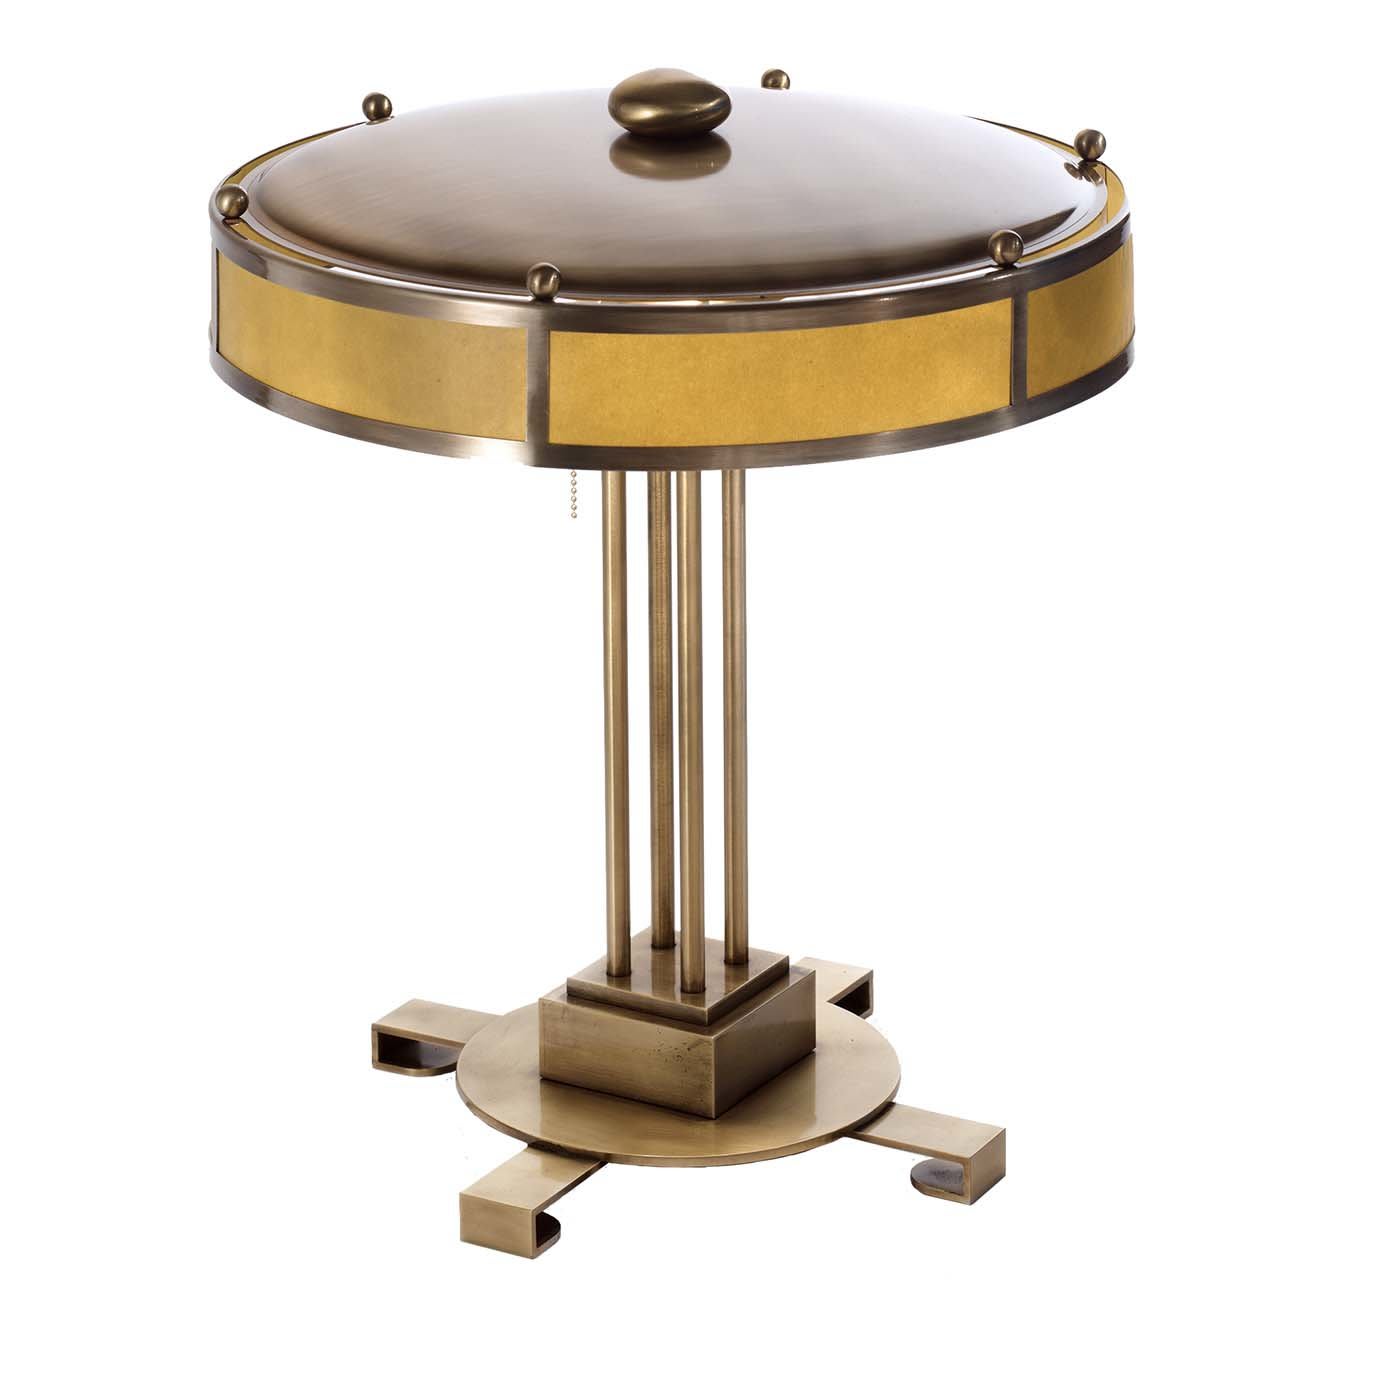 The Poggibonsi Table Lamp - B.B. for Reschio